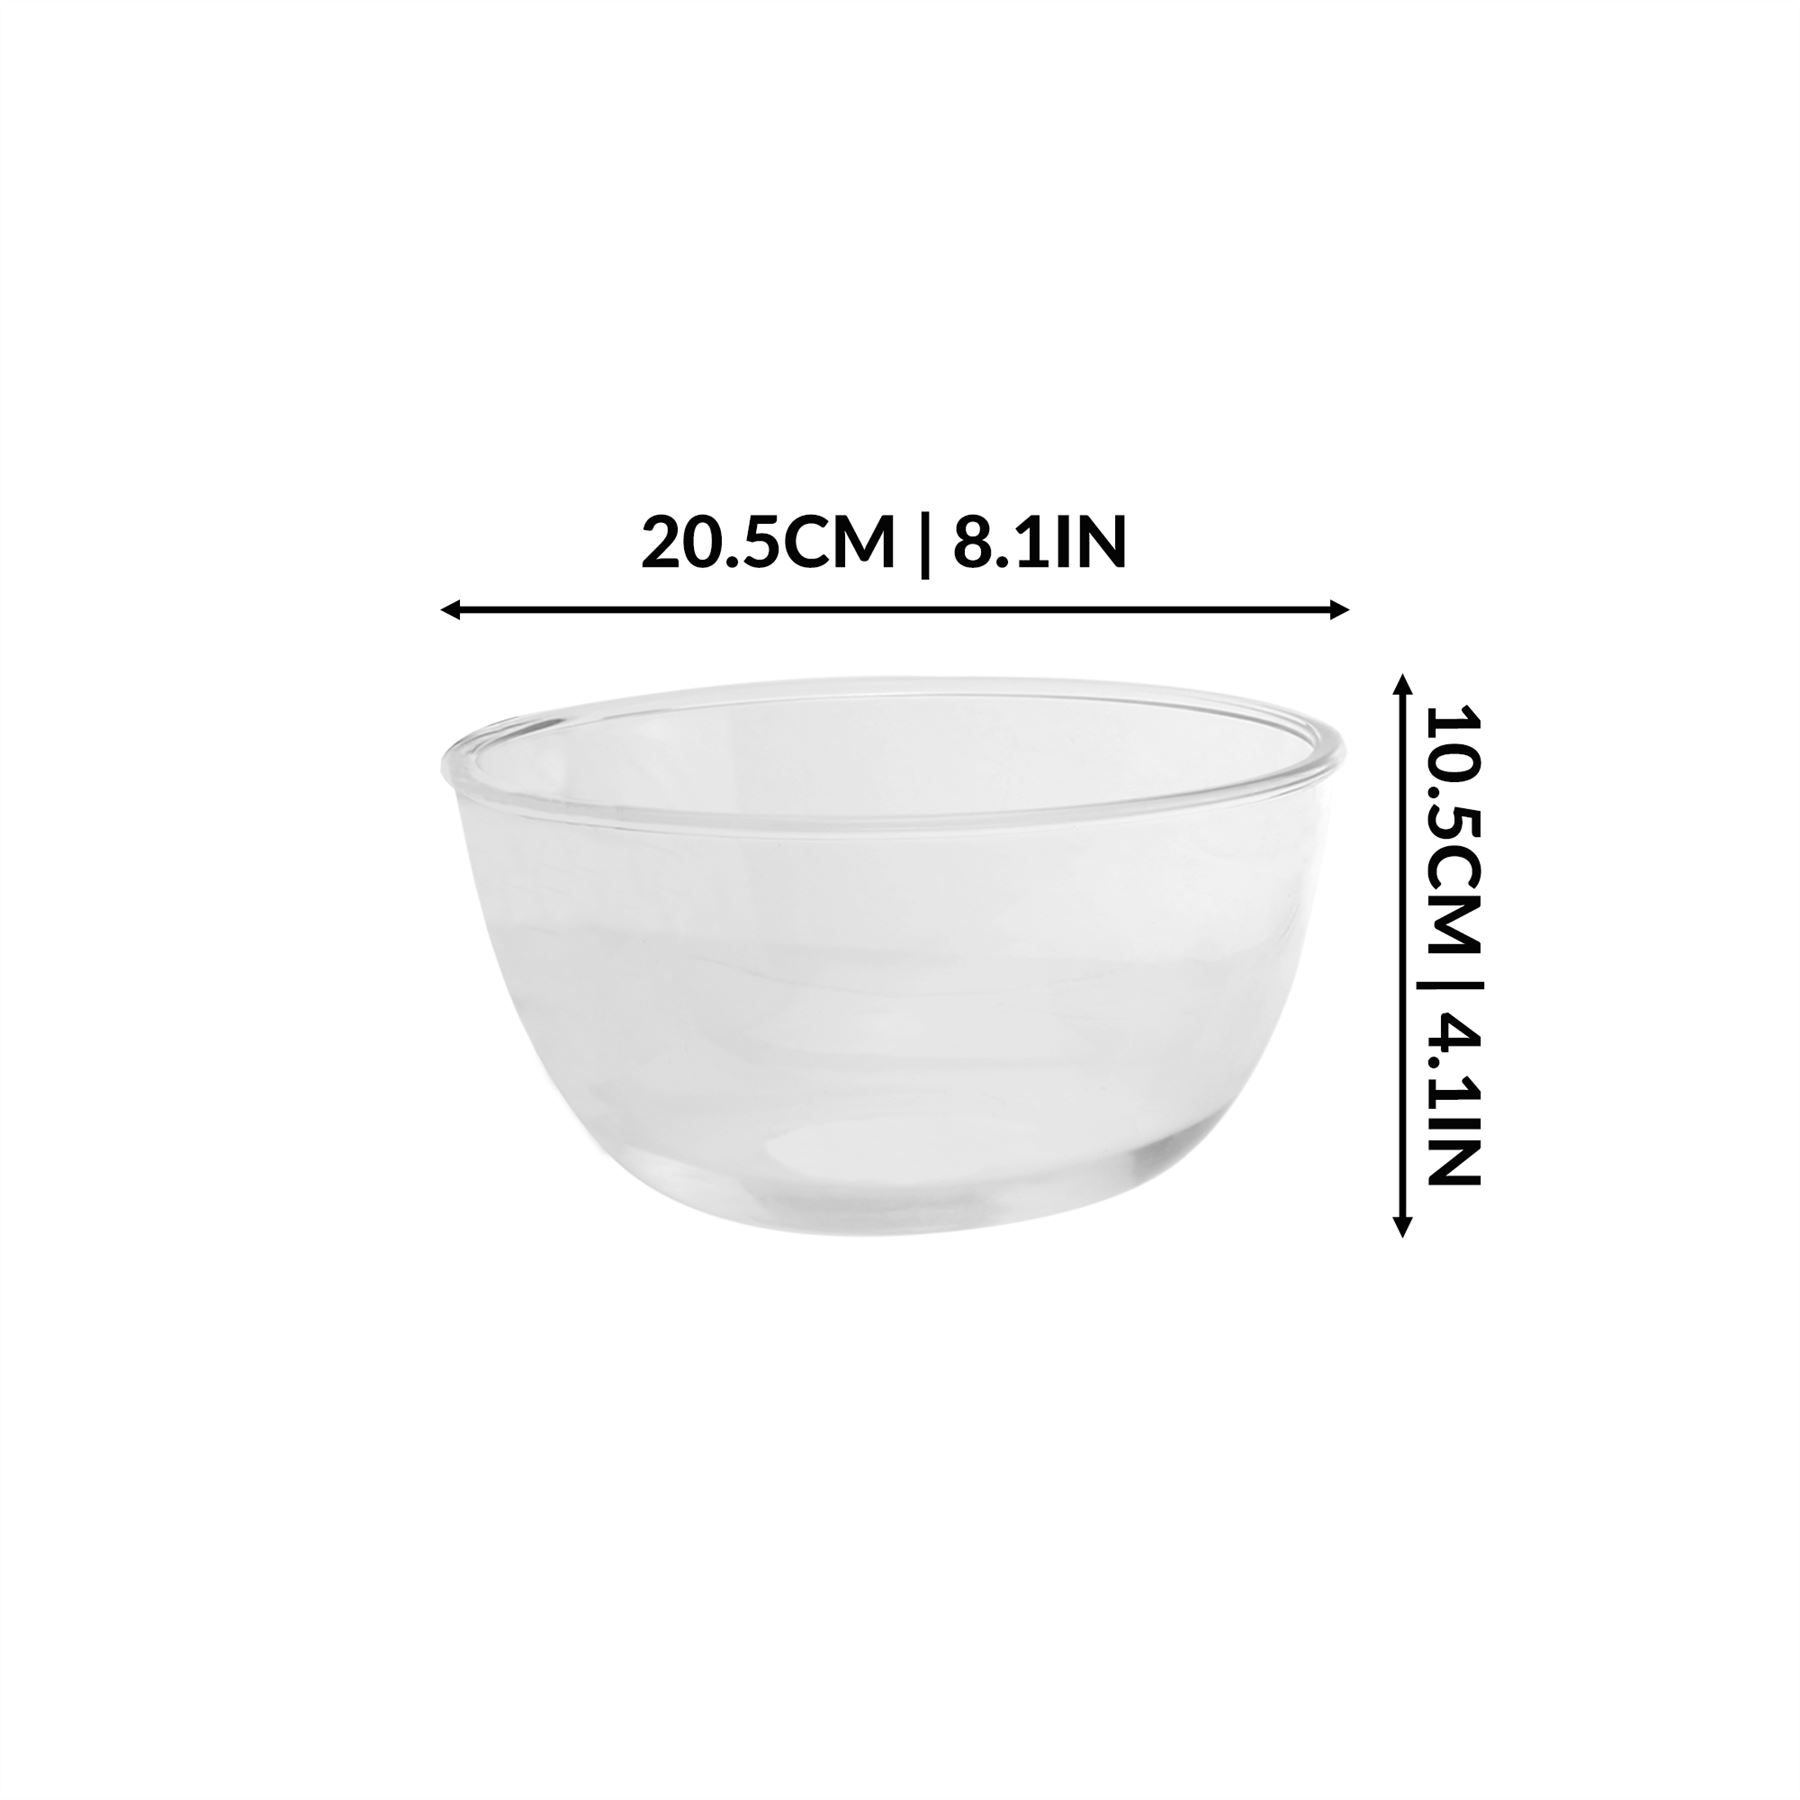 Glass Mixing Bowls - Set of 3 | M&W